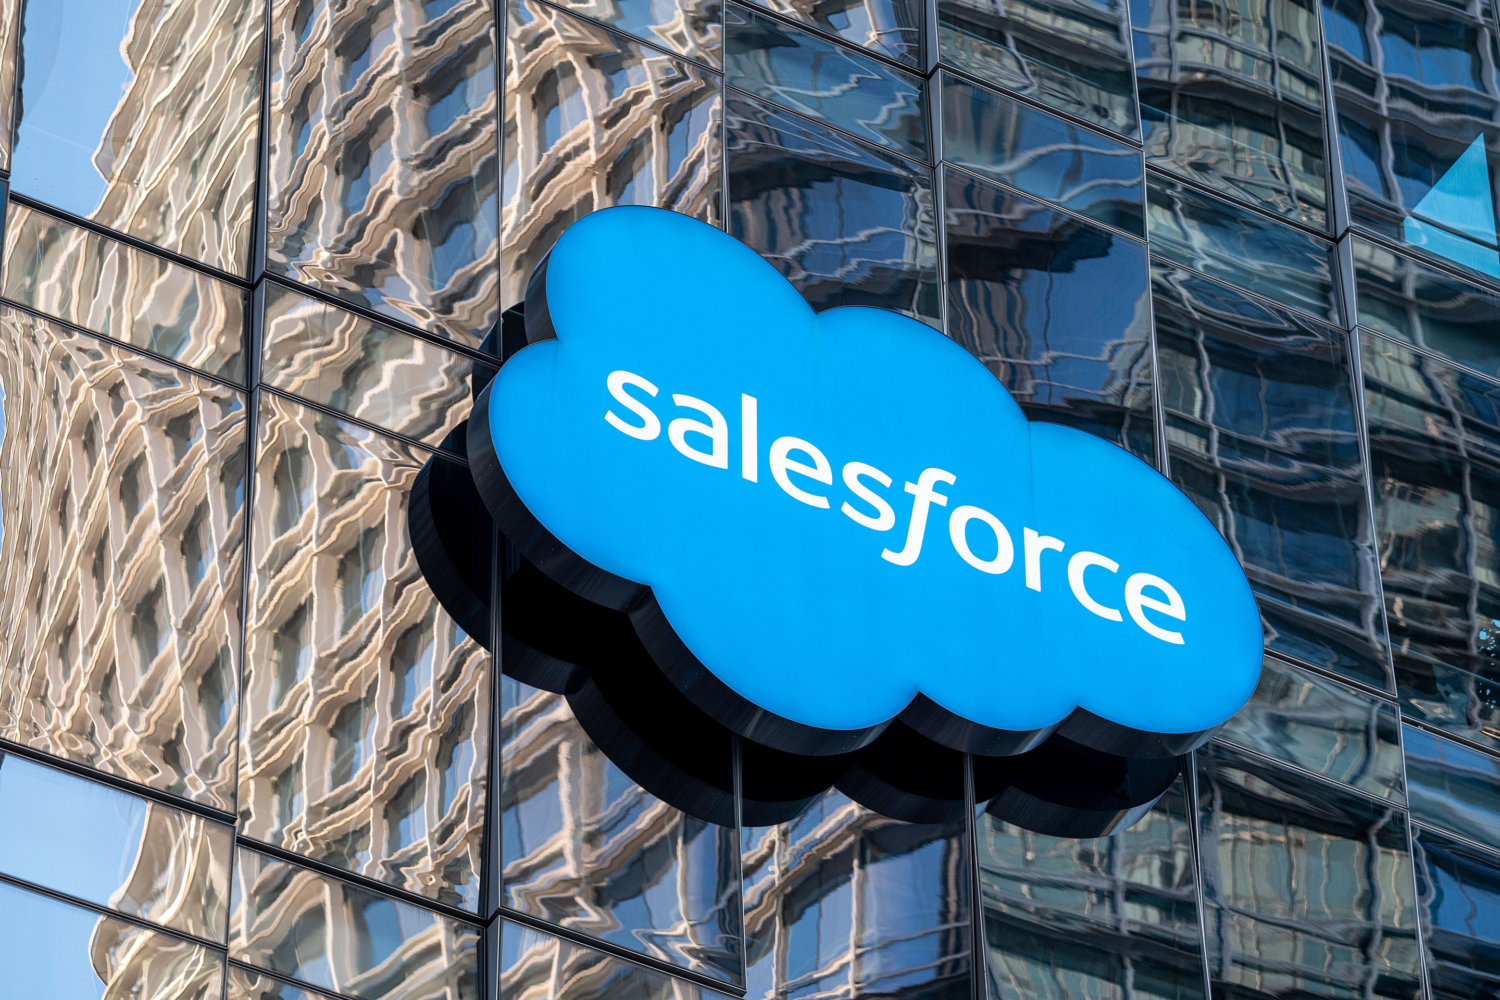 Salesforce logo on building